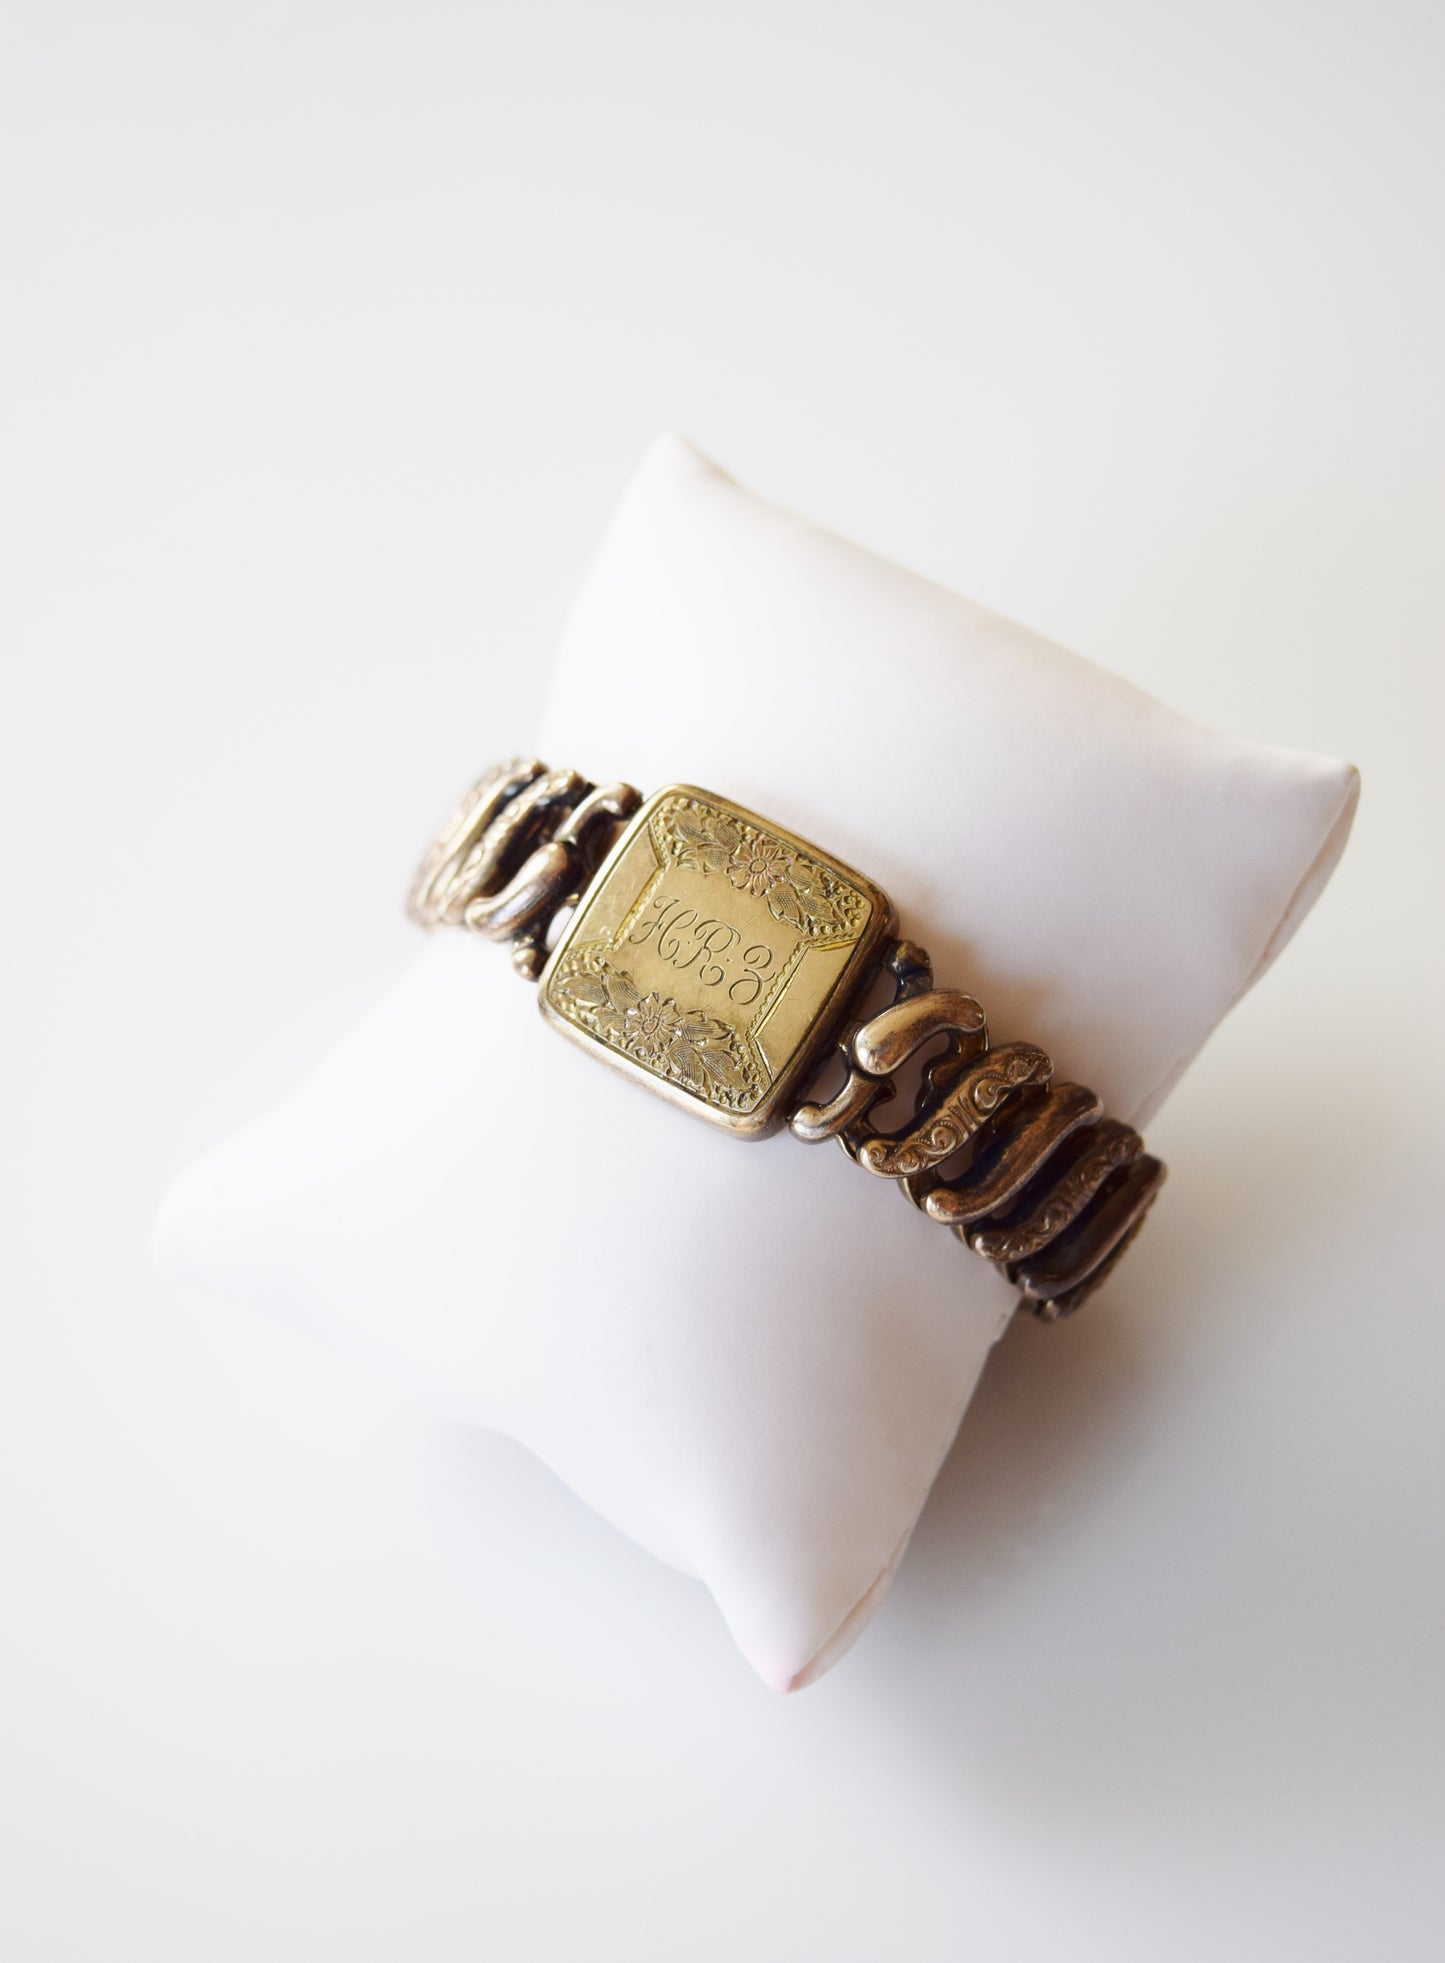 Antique Expandable Sweetheart Bracelet with Monogram